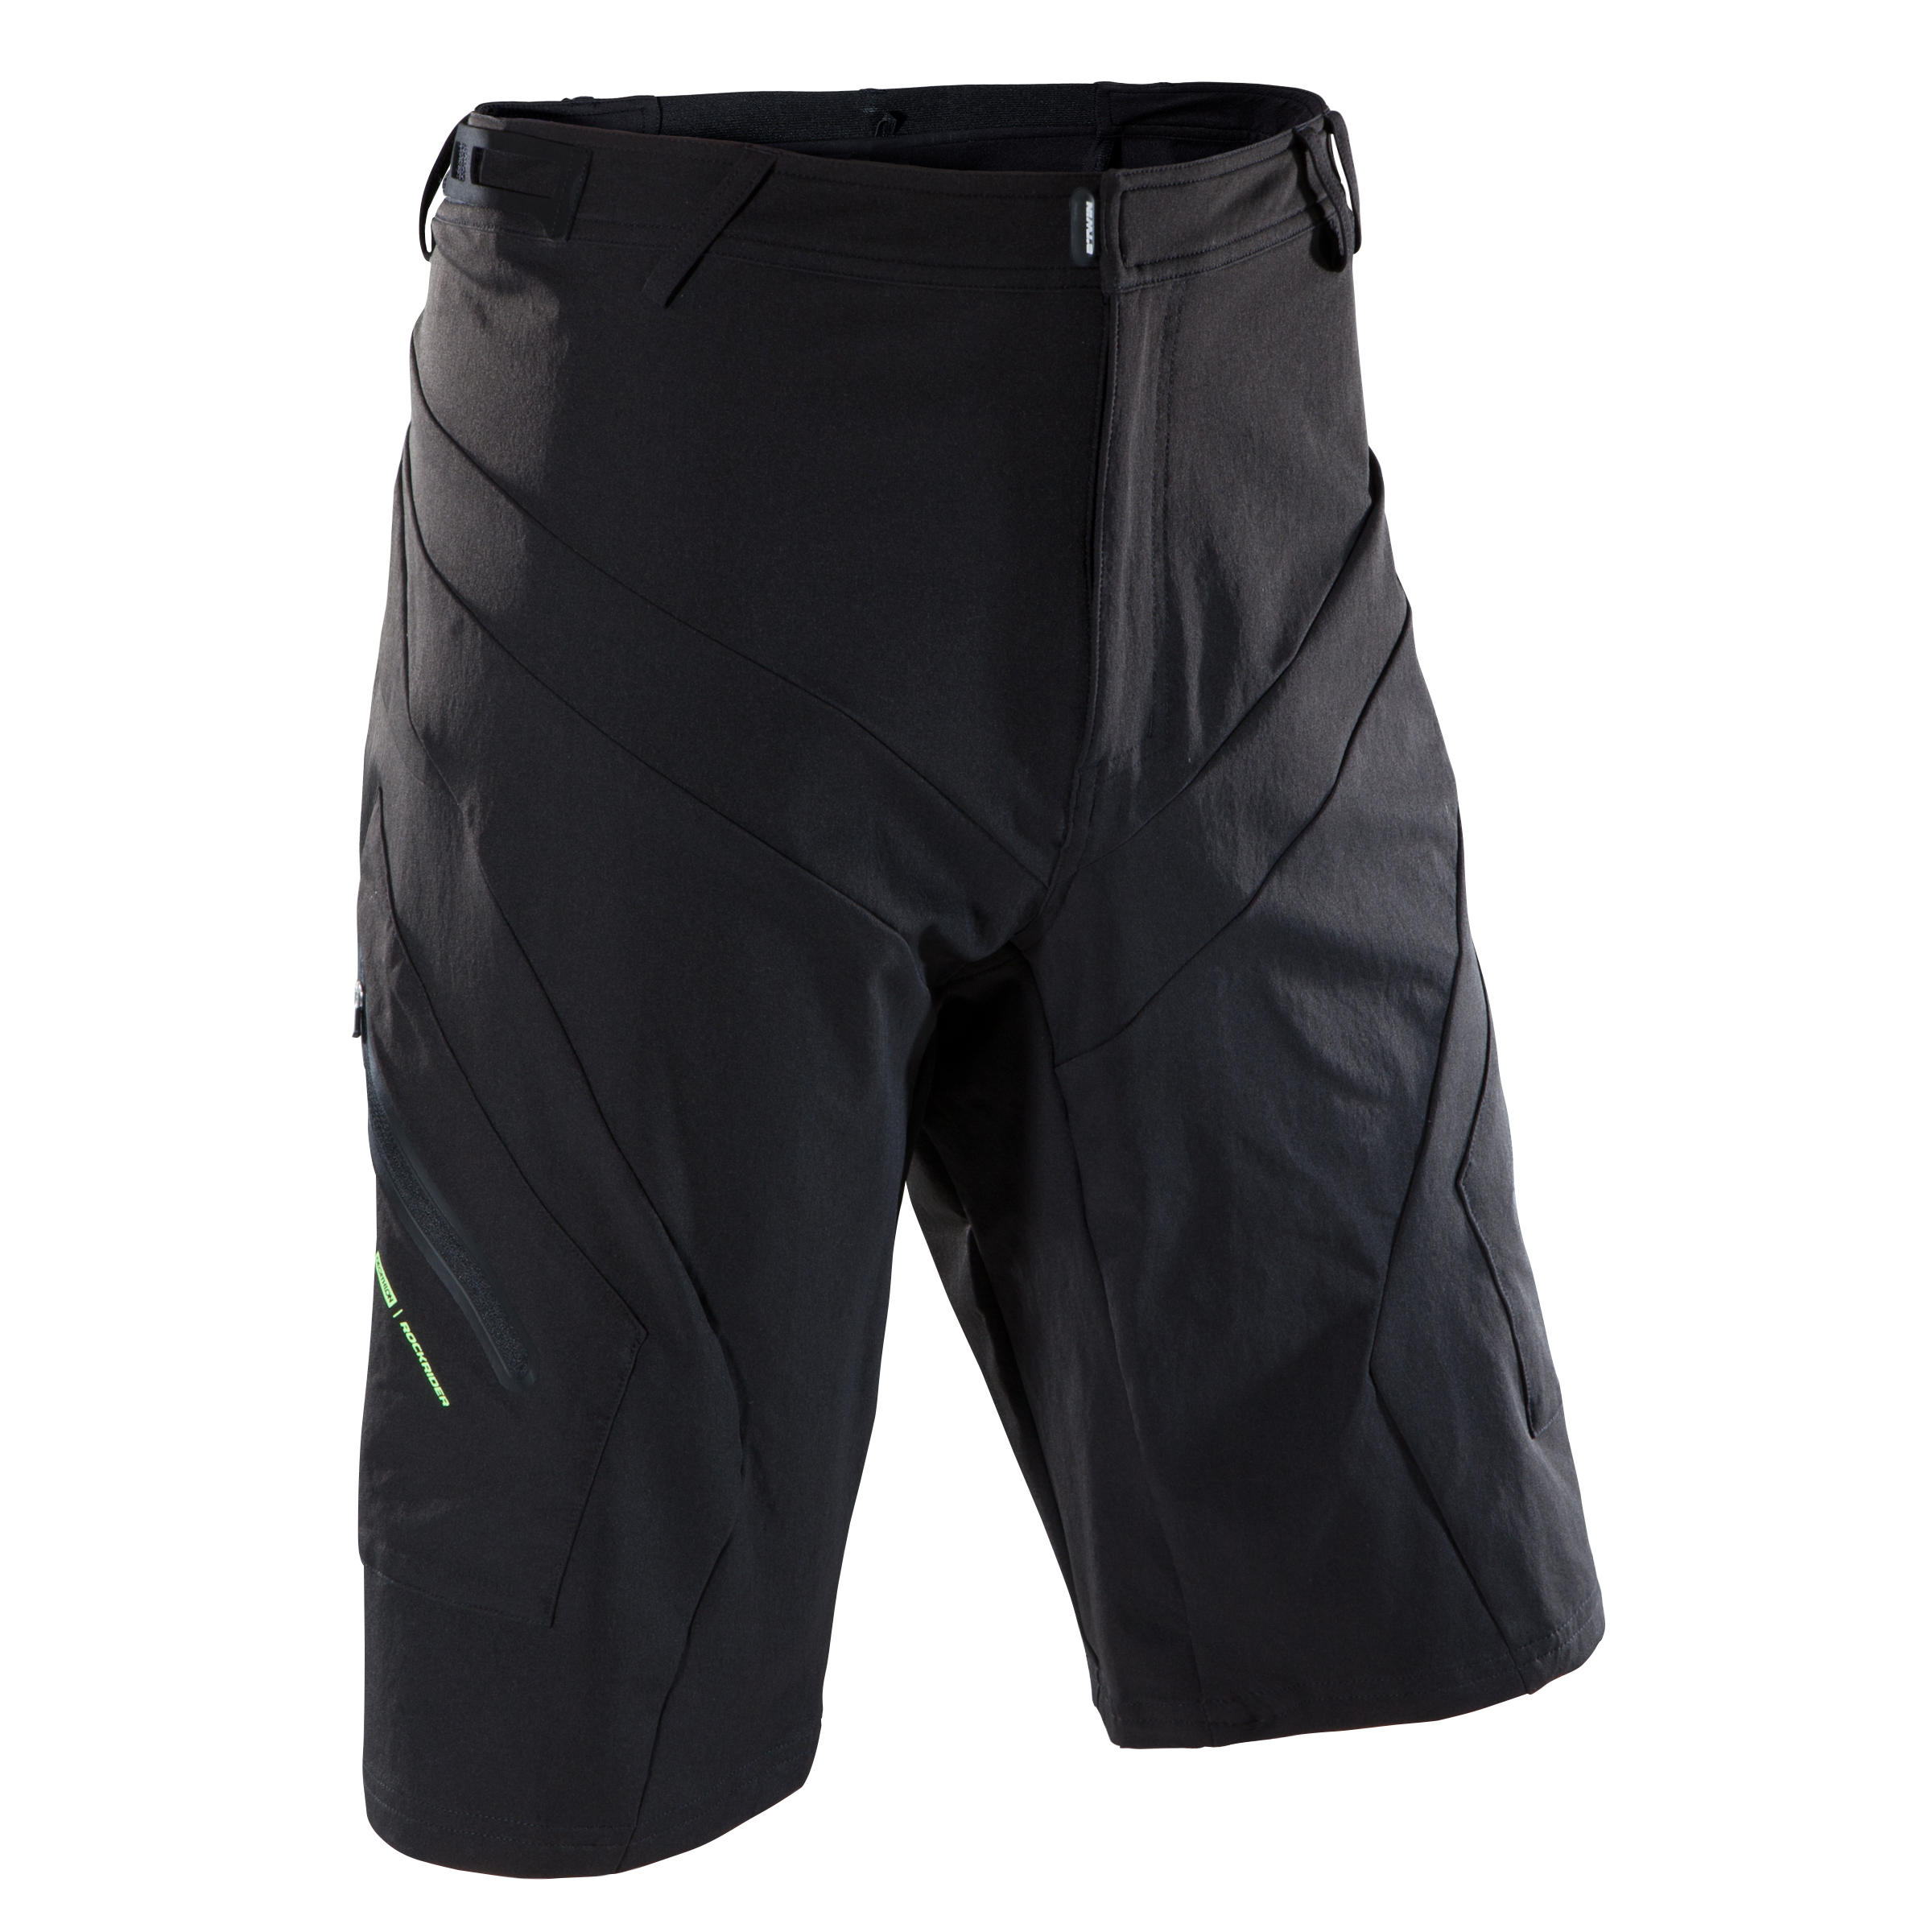 All Mountain Bike Shorts - Black 